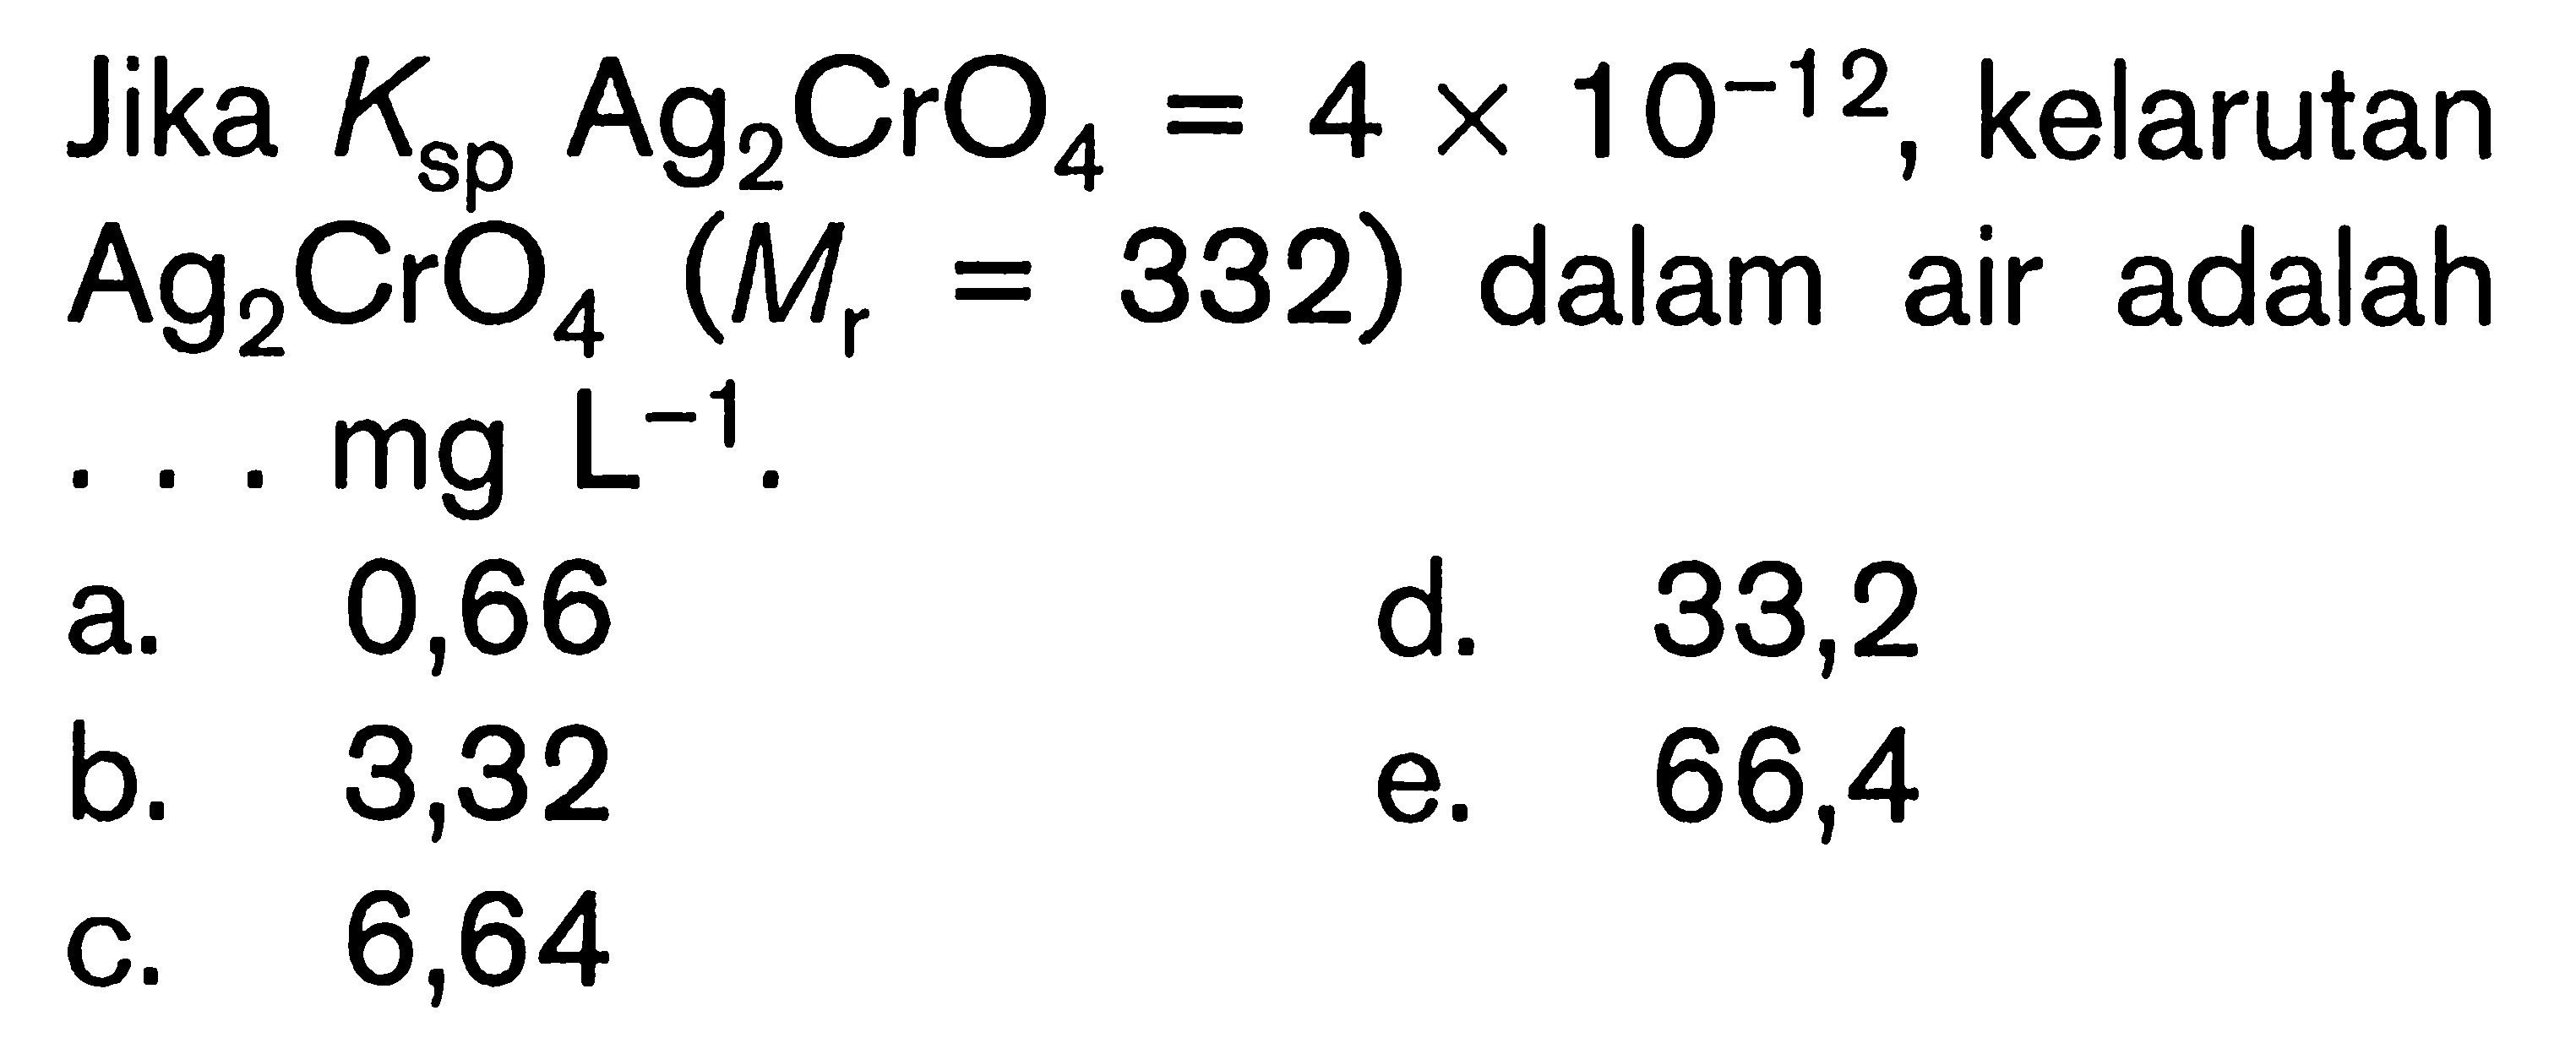 Jika Ksp Ag2 CrO4=4 x 10^-12, kelarutan Ag2CrO4 (Mr=332) dalam air adalah... mg L^-1.